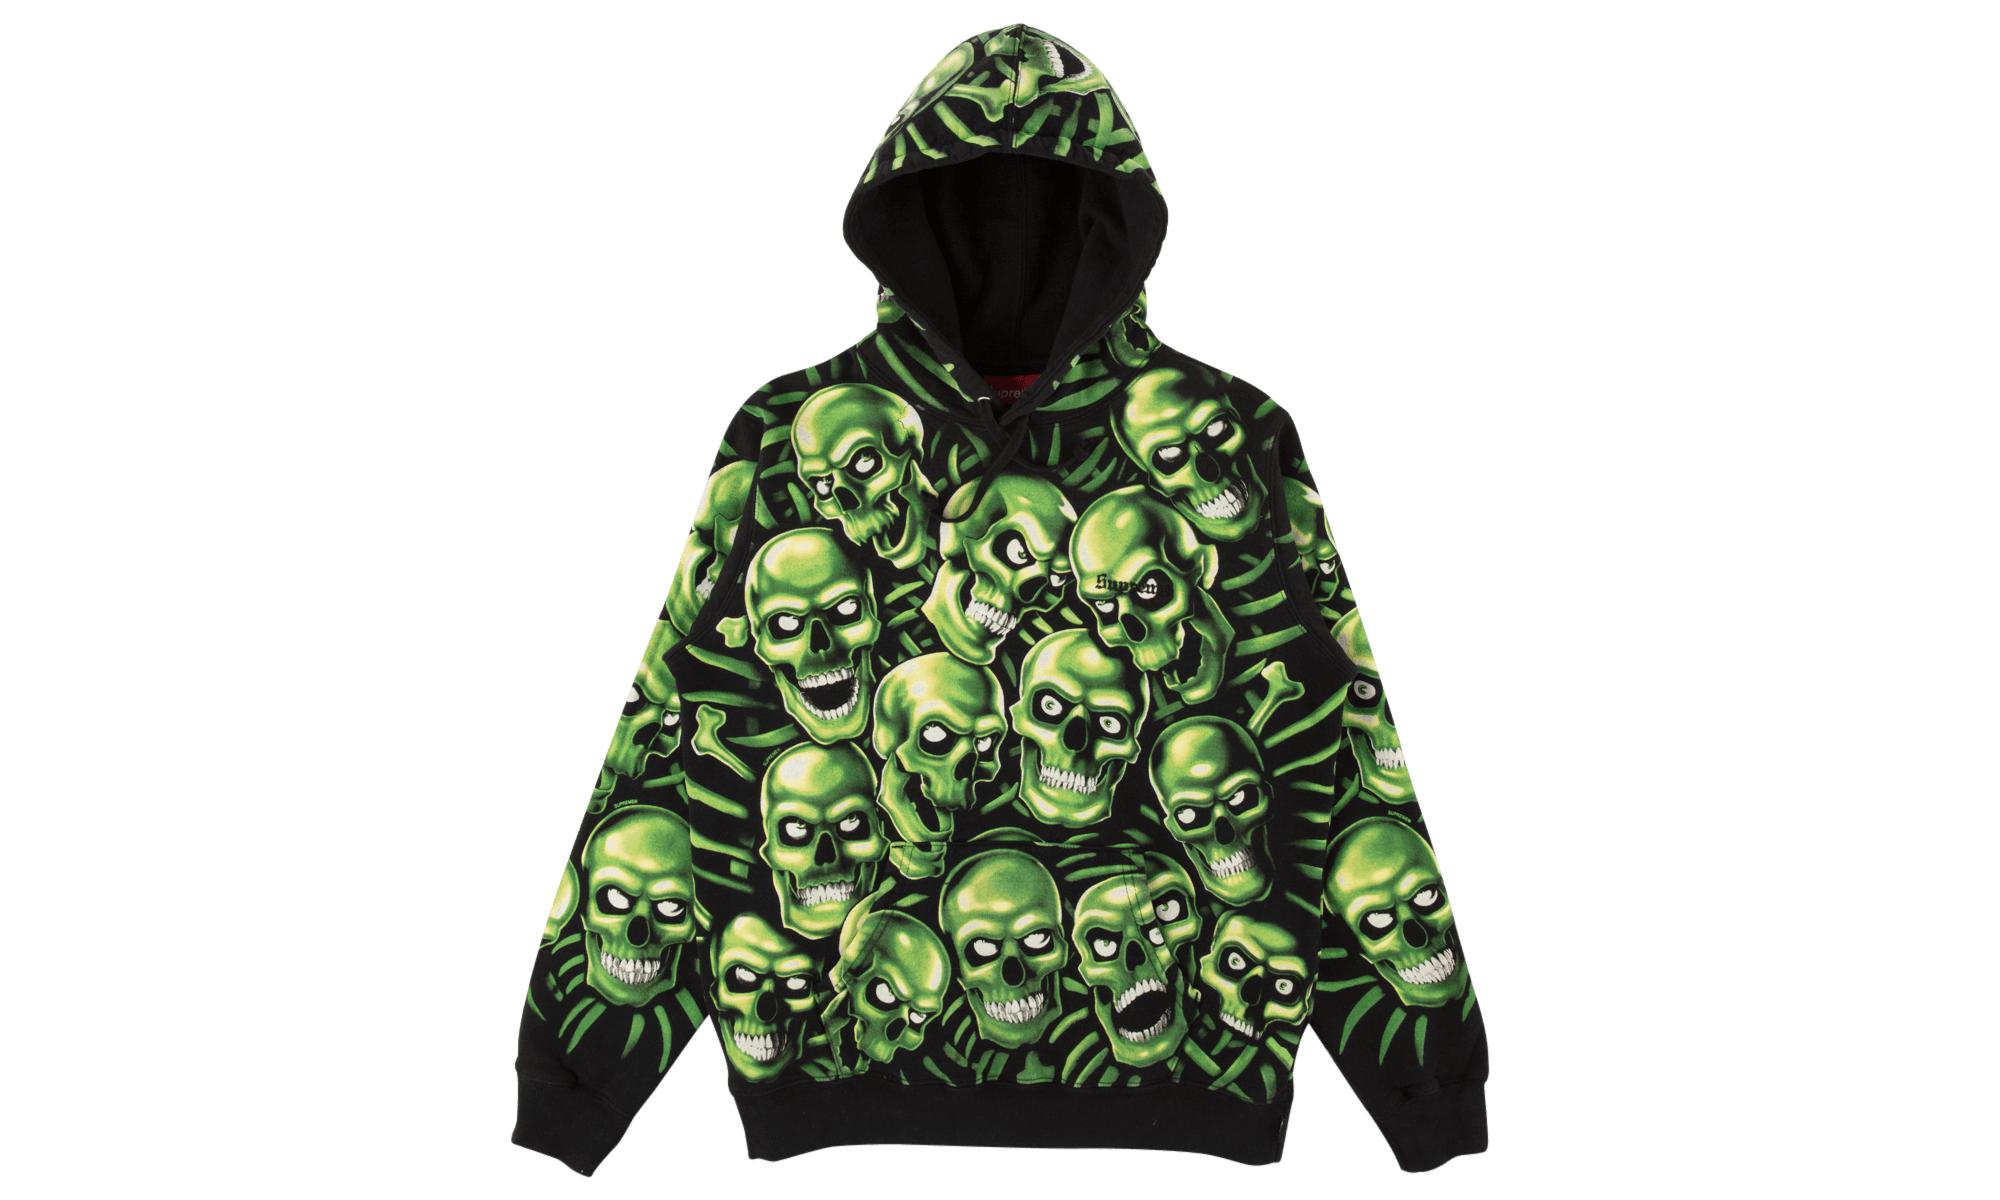 Lyst - Supreme Skull Pile Hooded Sweatshirt in Green for Men - Save 11.